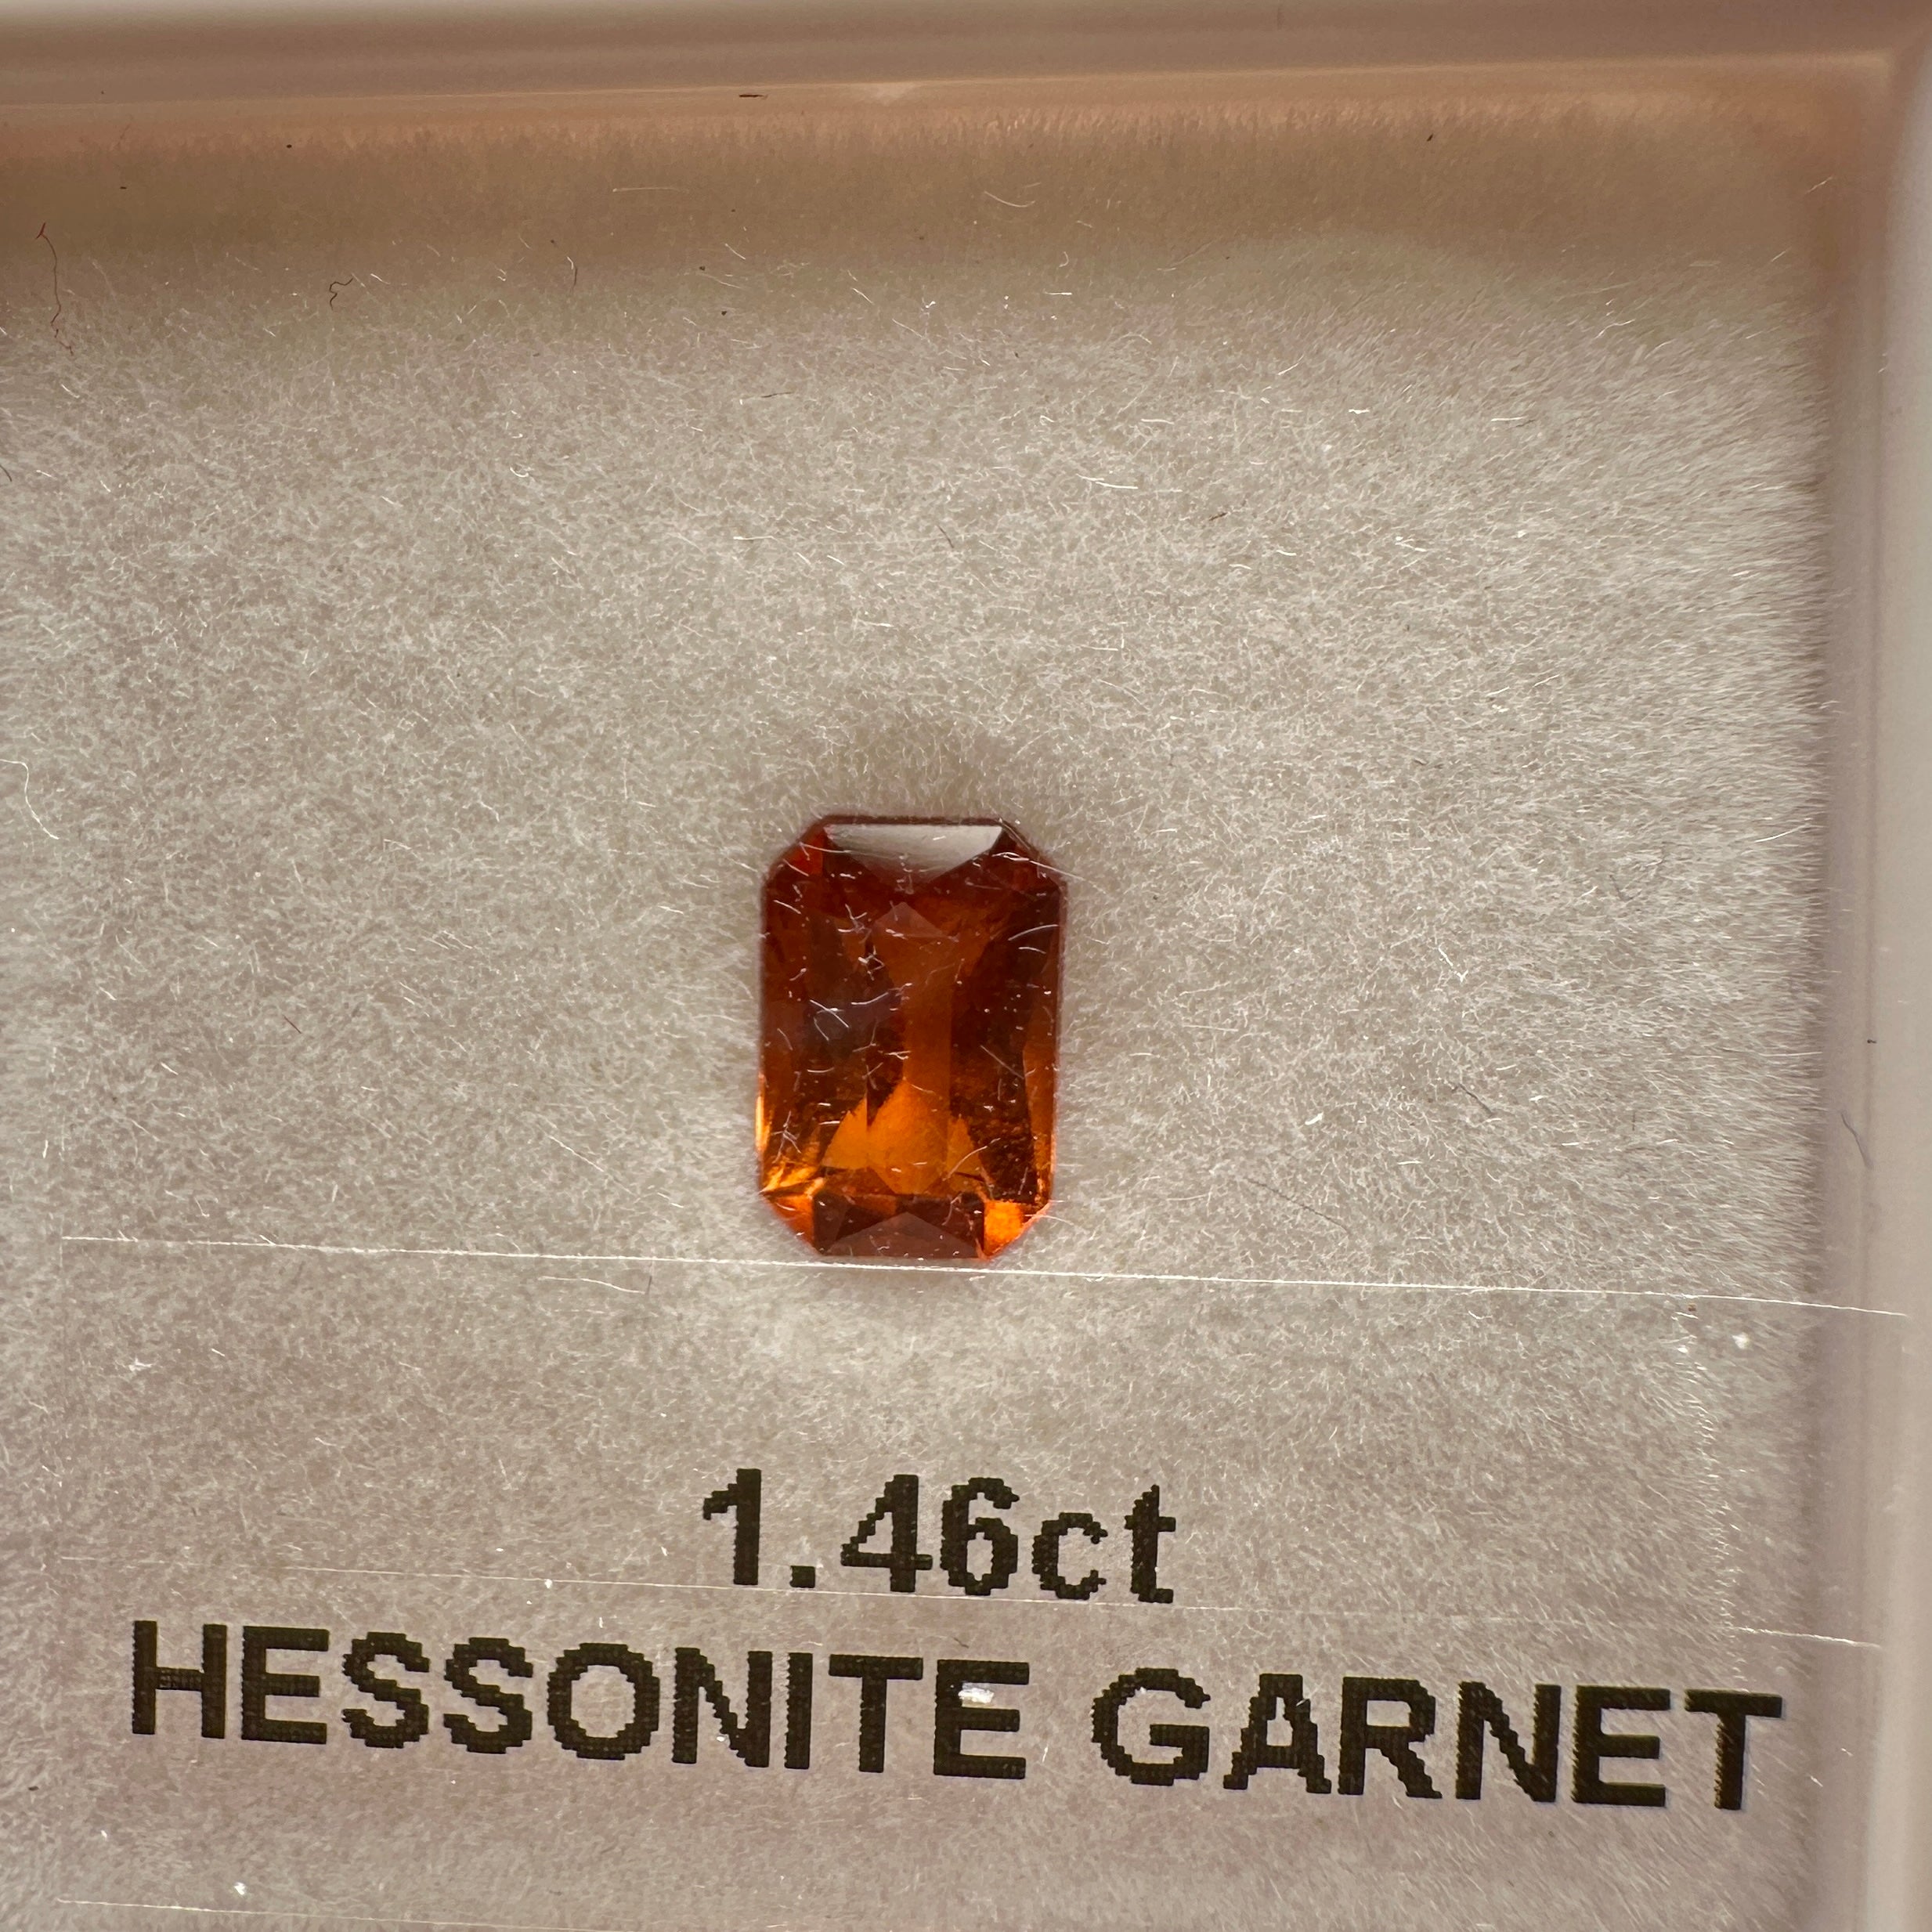 1.46ct Hessonite Garnet, Untreated Unheated, native cut